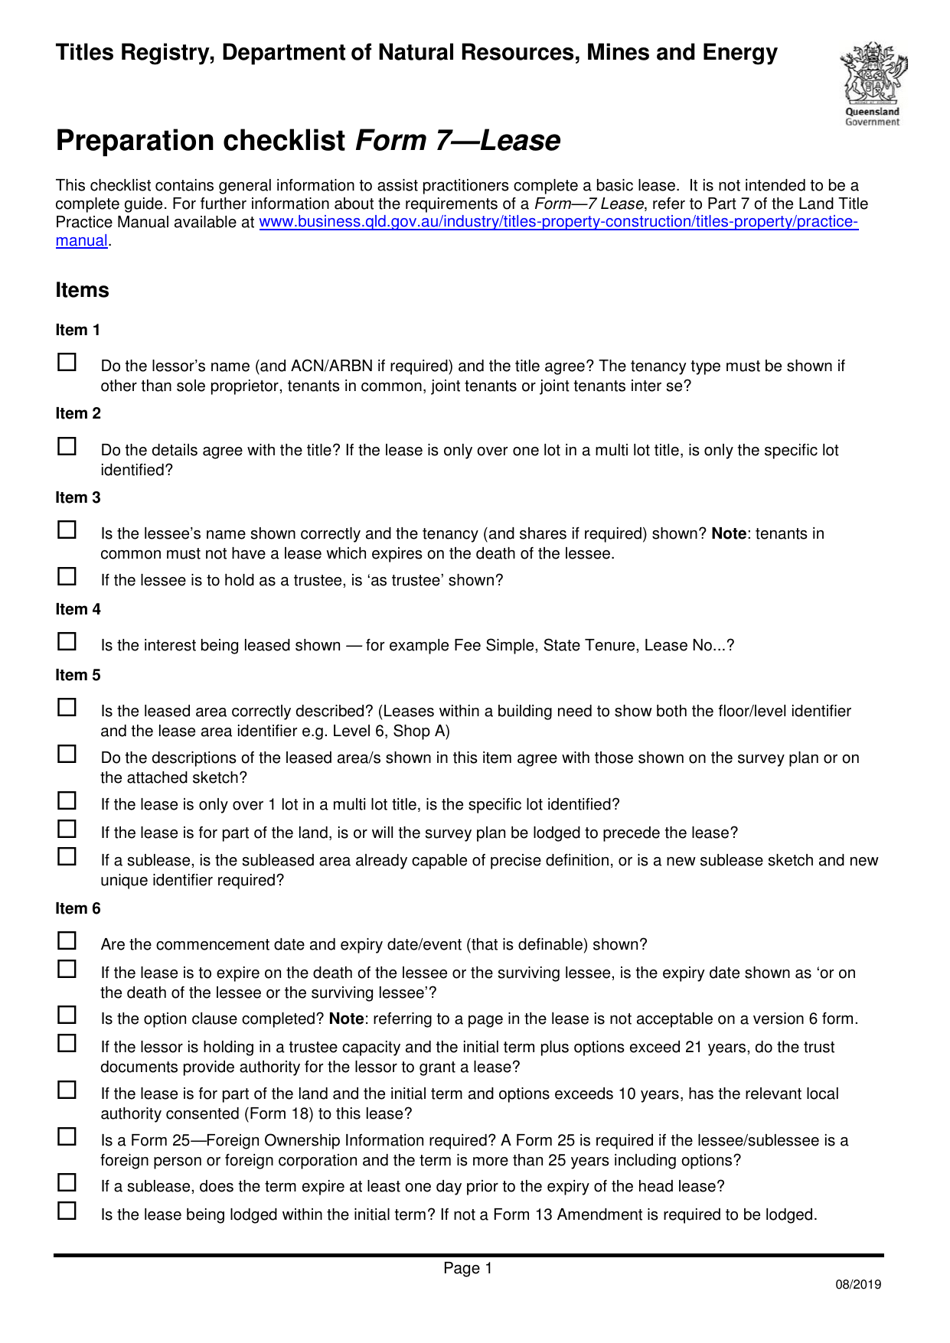 Form 7 Preparation Checklist -lease - Queensland, Australia, Page 1